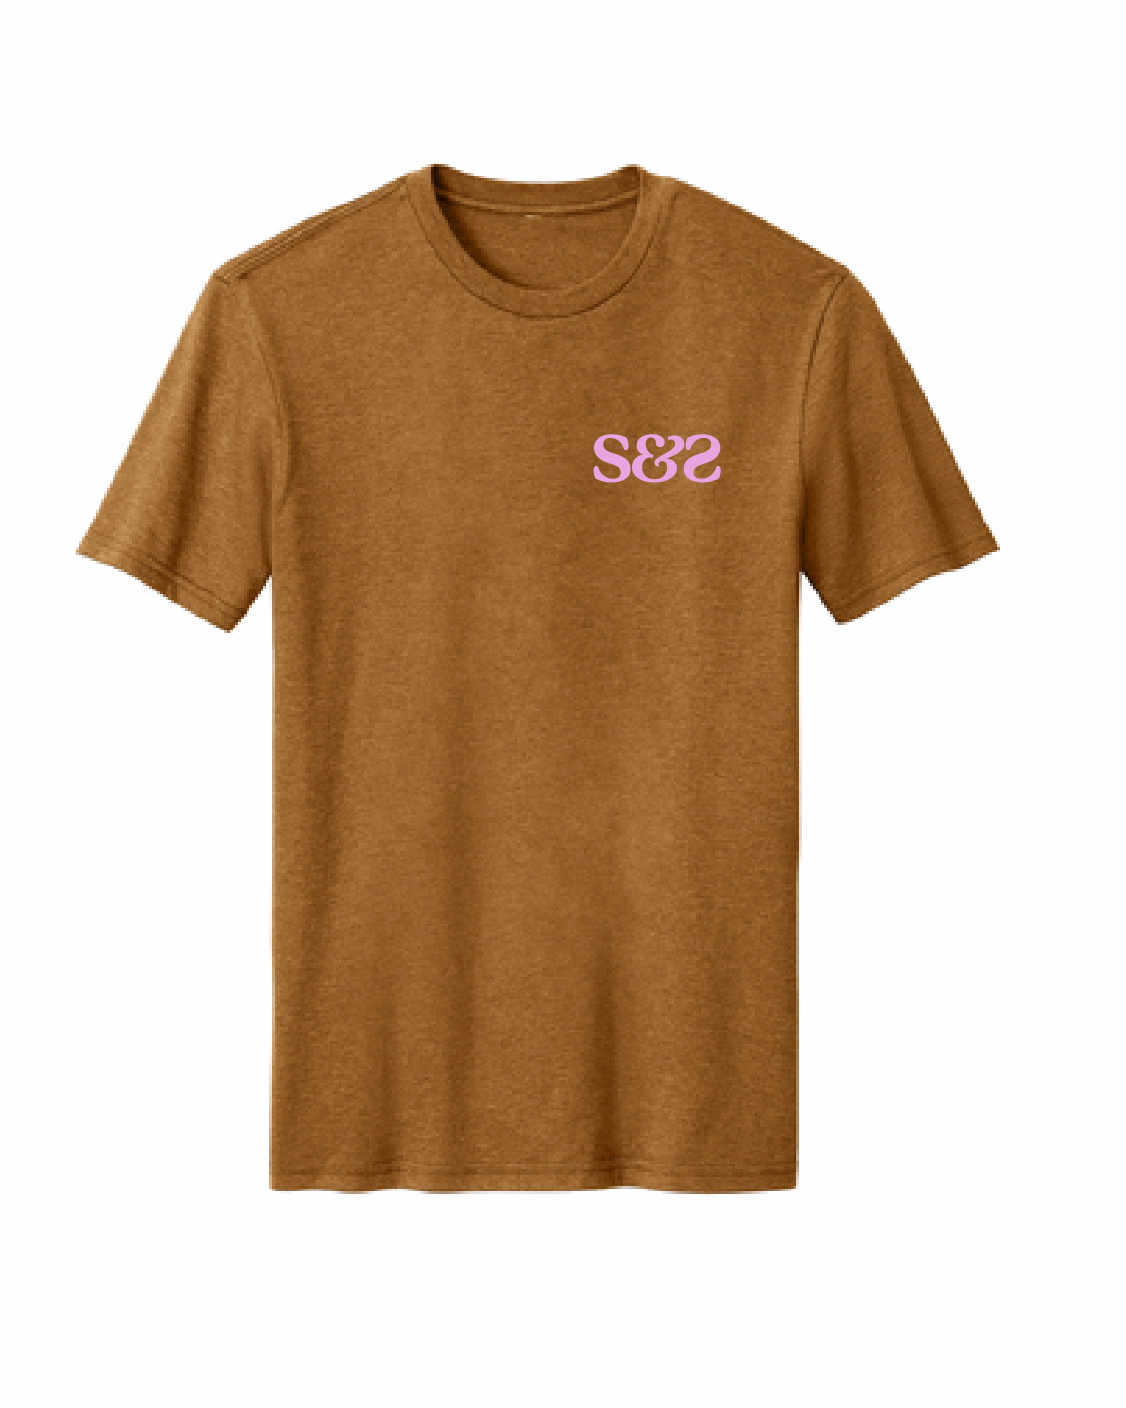 Perfect Blend Unisex T-Shirt /  Duck Brown, Lavender + Cream / Salt and Sand / Long Live Summer